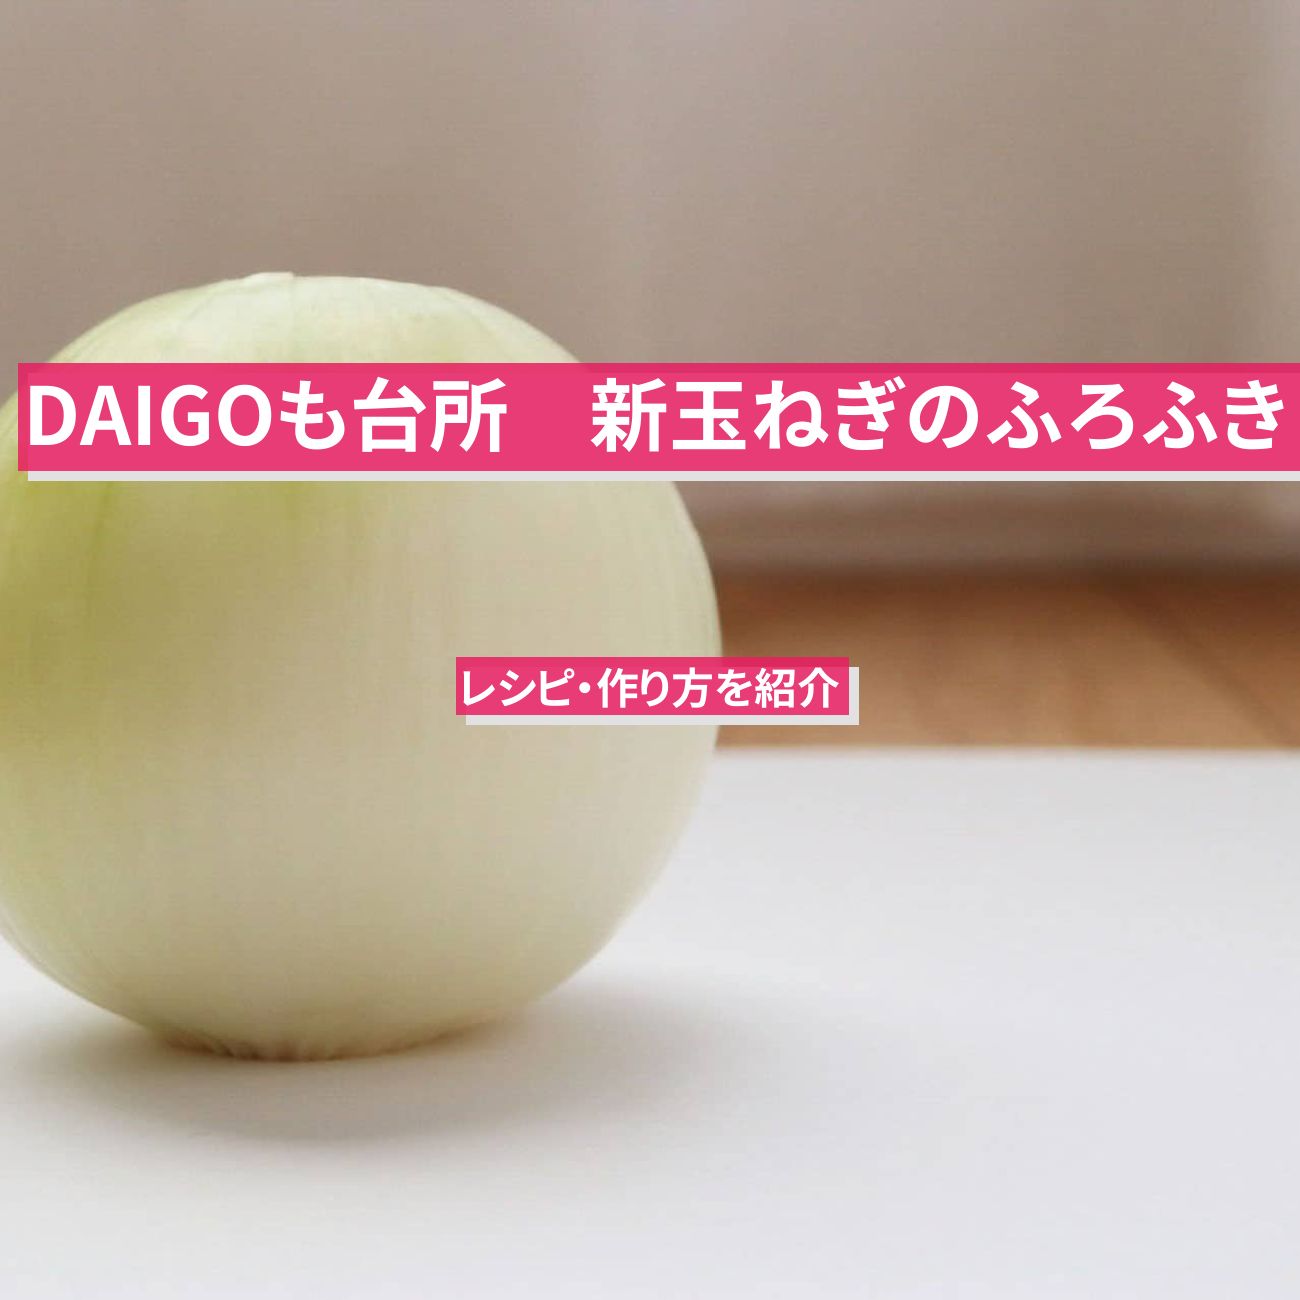 【DAIGOも台所】『新玉ねぎのふろふき』のレシピ・作り方を紹介〔ダイゴも台所〕